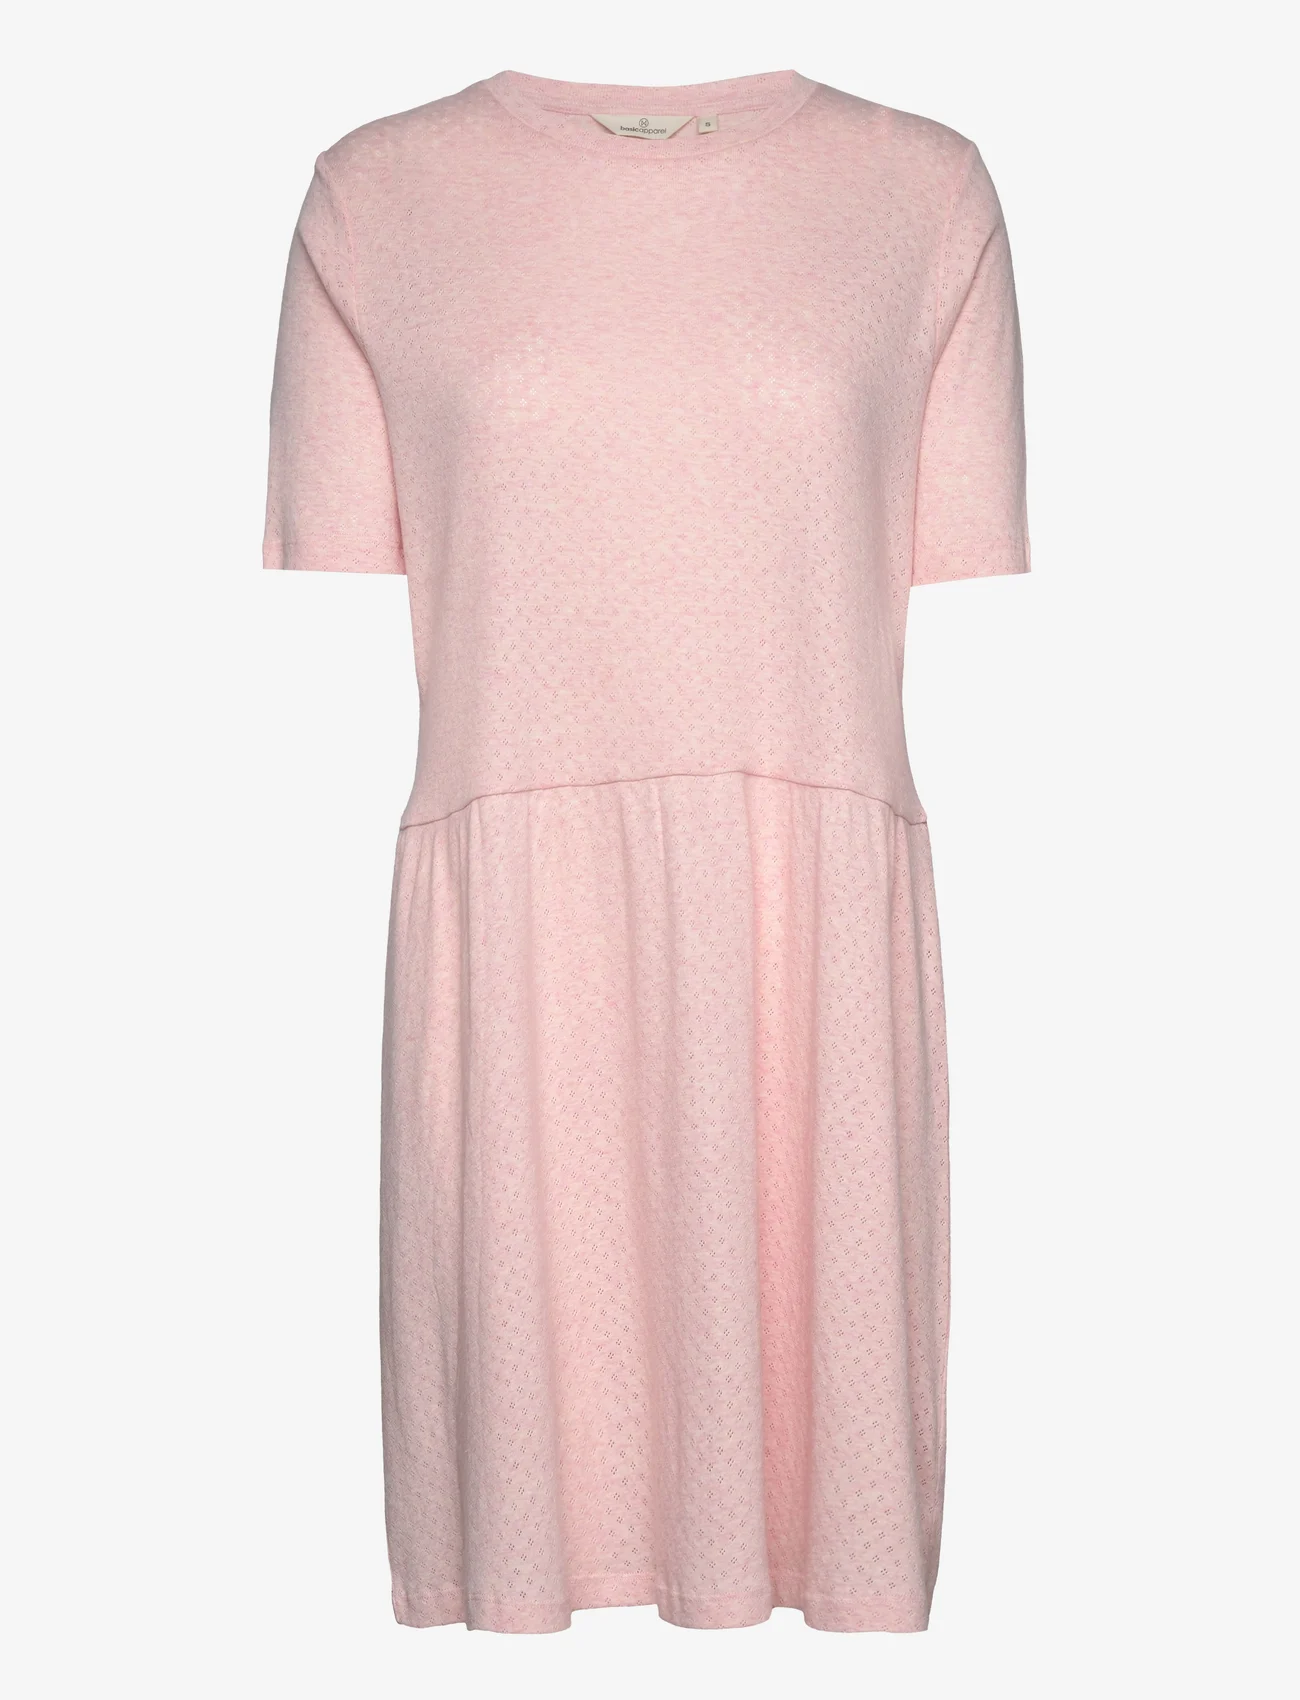 Basic Apparel - Arense Dress GOTS - t-shirtkjoler - pink melange - 0